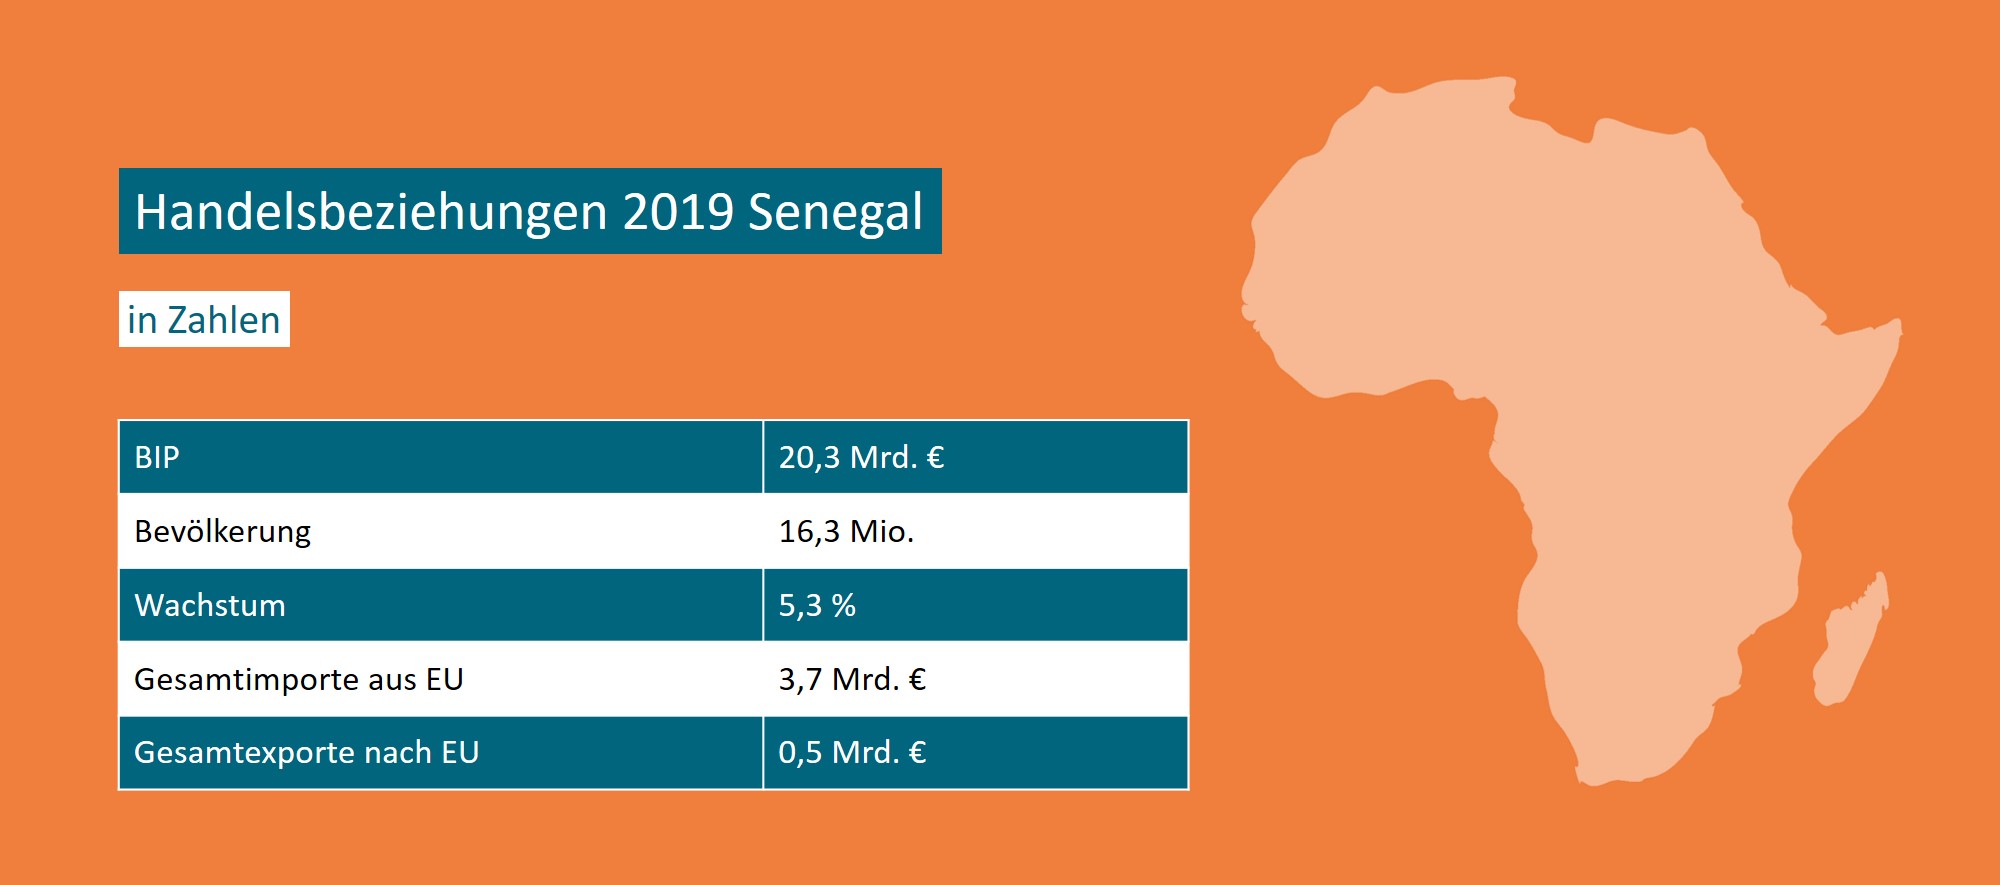 Handelsbeziehungen 2019 Senegal in Zahlen 